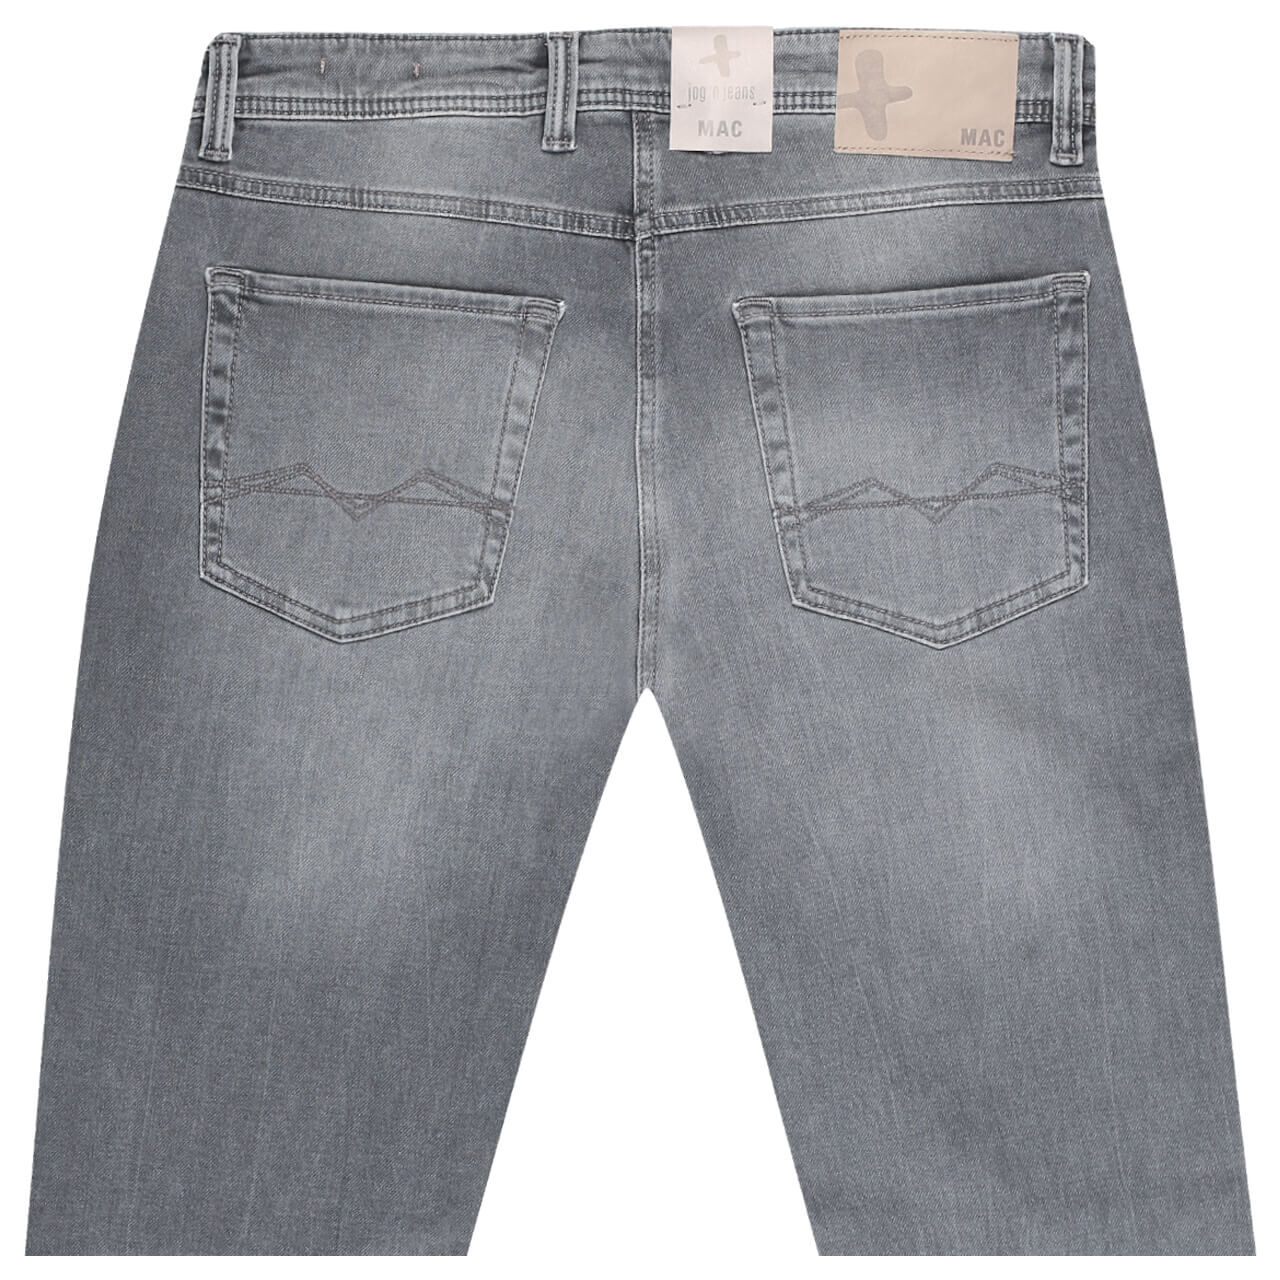 MAC Jogn Jeans mid grey authentic wash